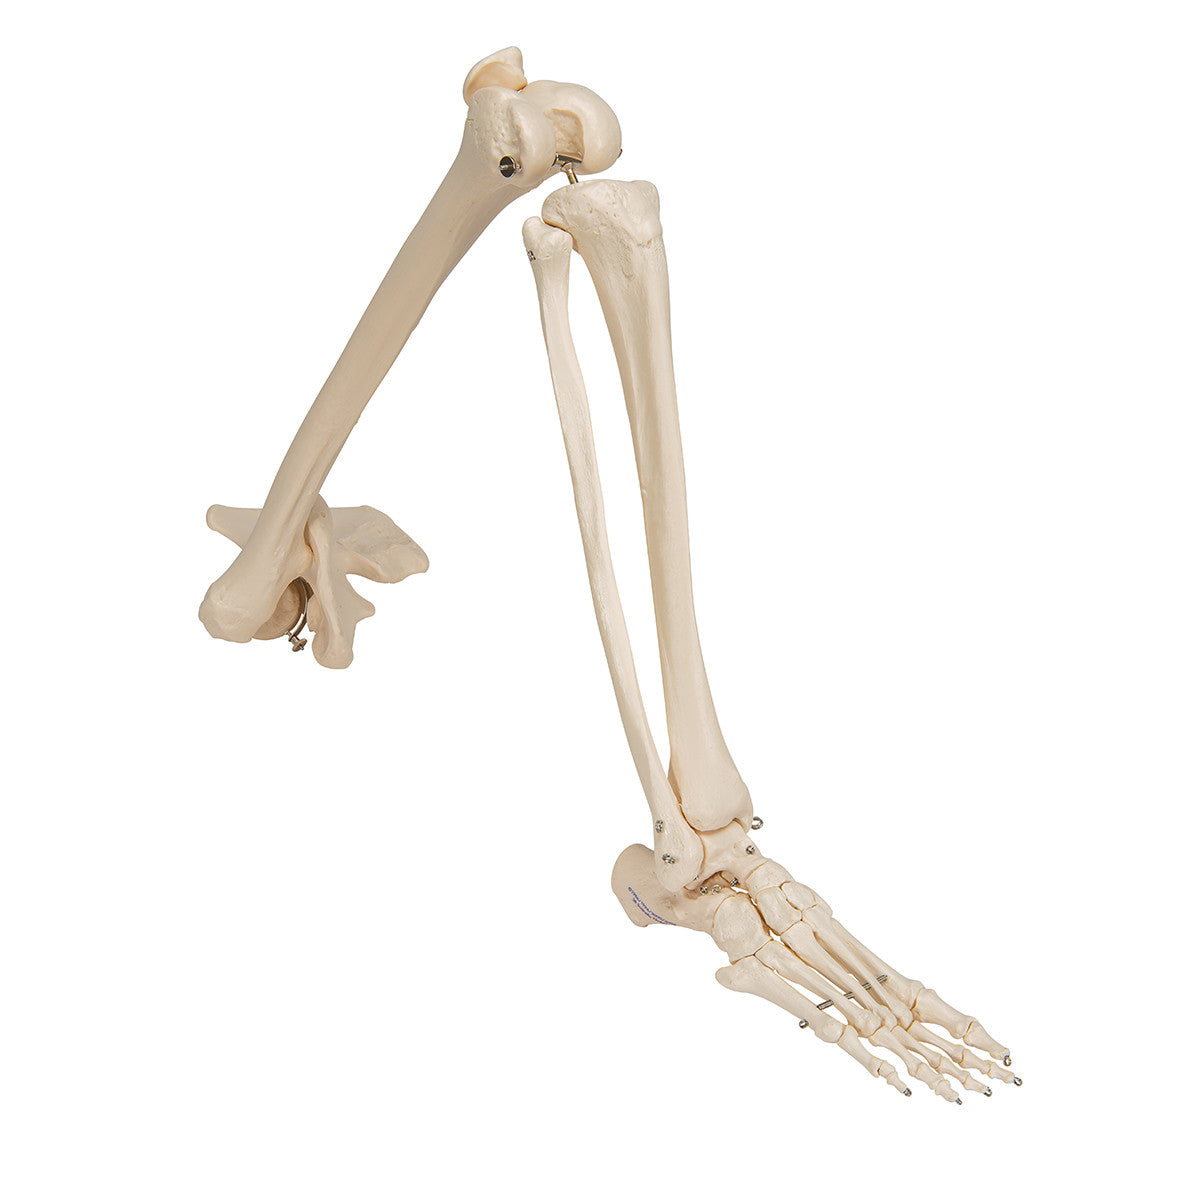 Leg Skeleton with Hip Bone | 3B Scientific A36